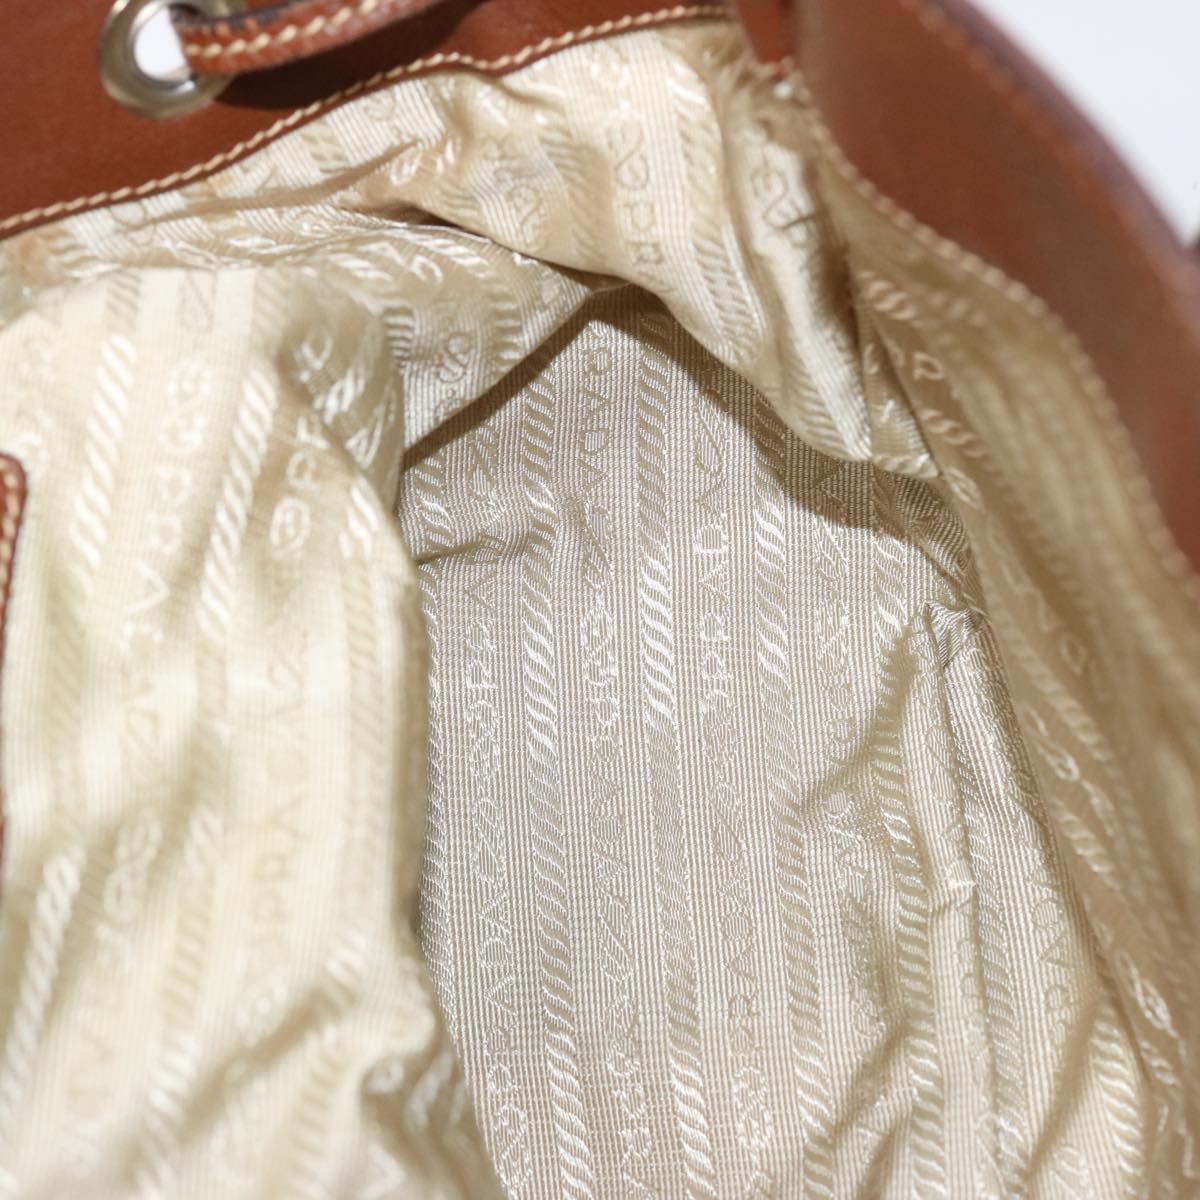 PRADA Shoulder Bag Nylon Leather Beige Brown Auth fm3273